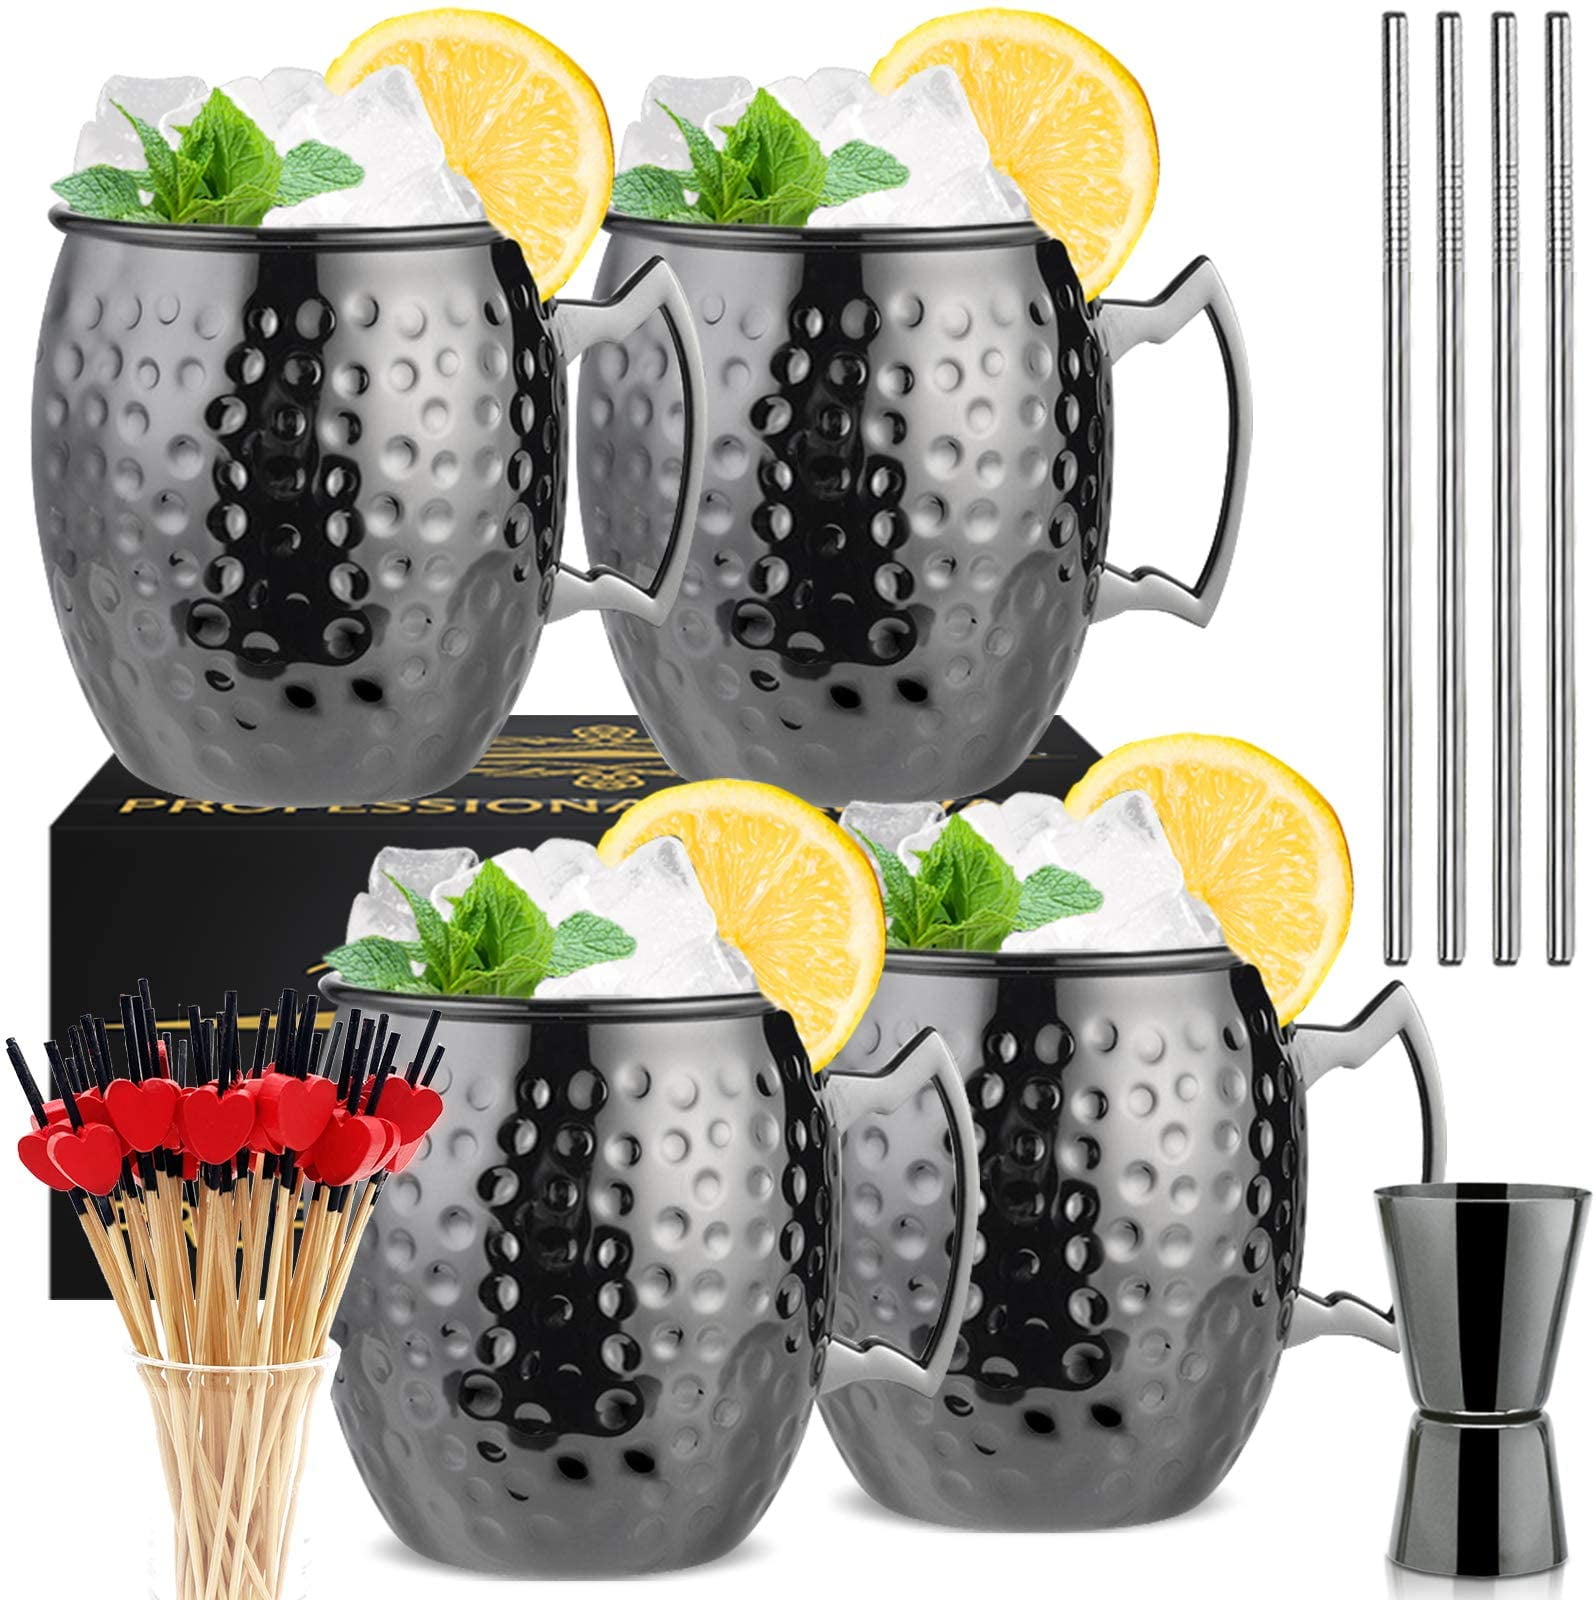 for Chilled Drinks Party Opener Set Set of 4 Gunmetal Black Stainless Steel Mug 18oz Bar Blade Cap Opener Moscow Mule Mugs 